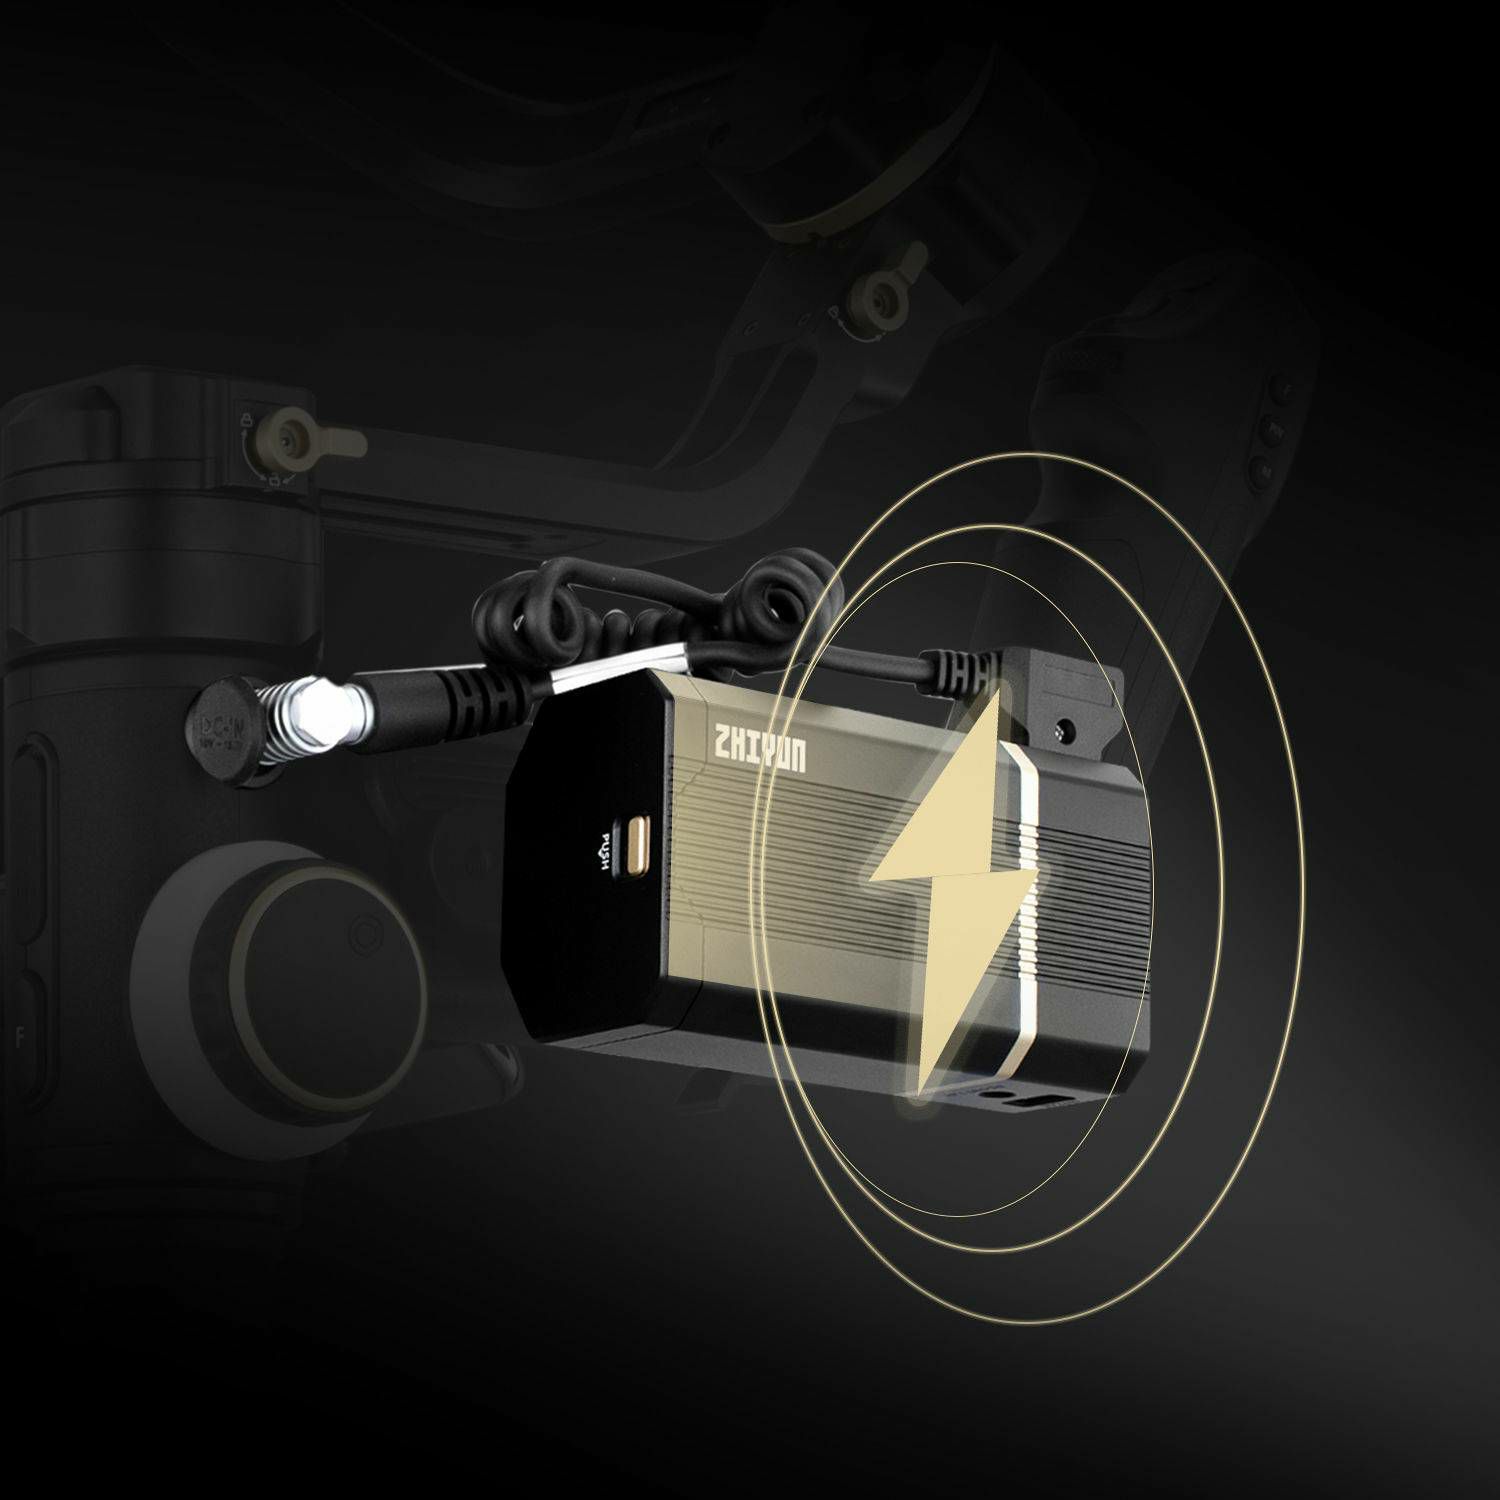 Zhiyun Crane 3S Handheld Stabilizer stabilizator za DSLR fotoaparate 0.6 to 6.49 kg